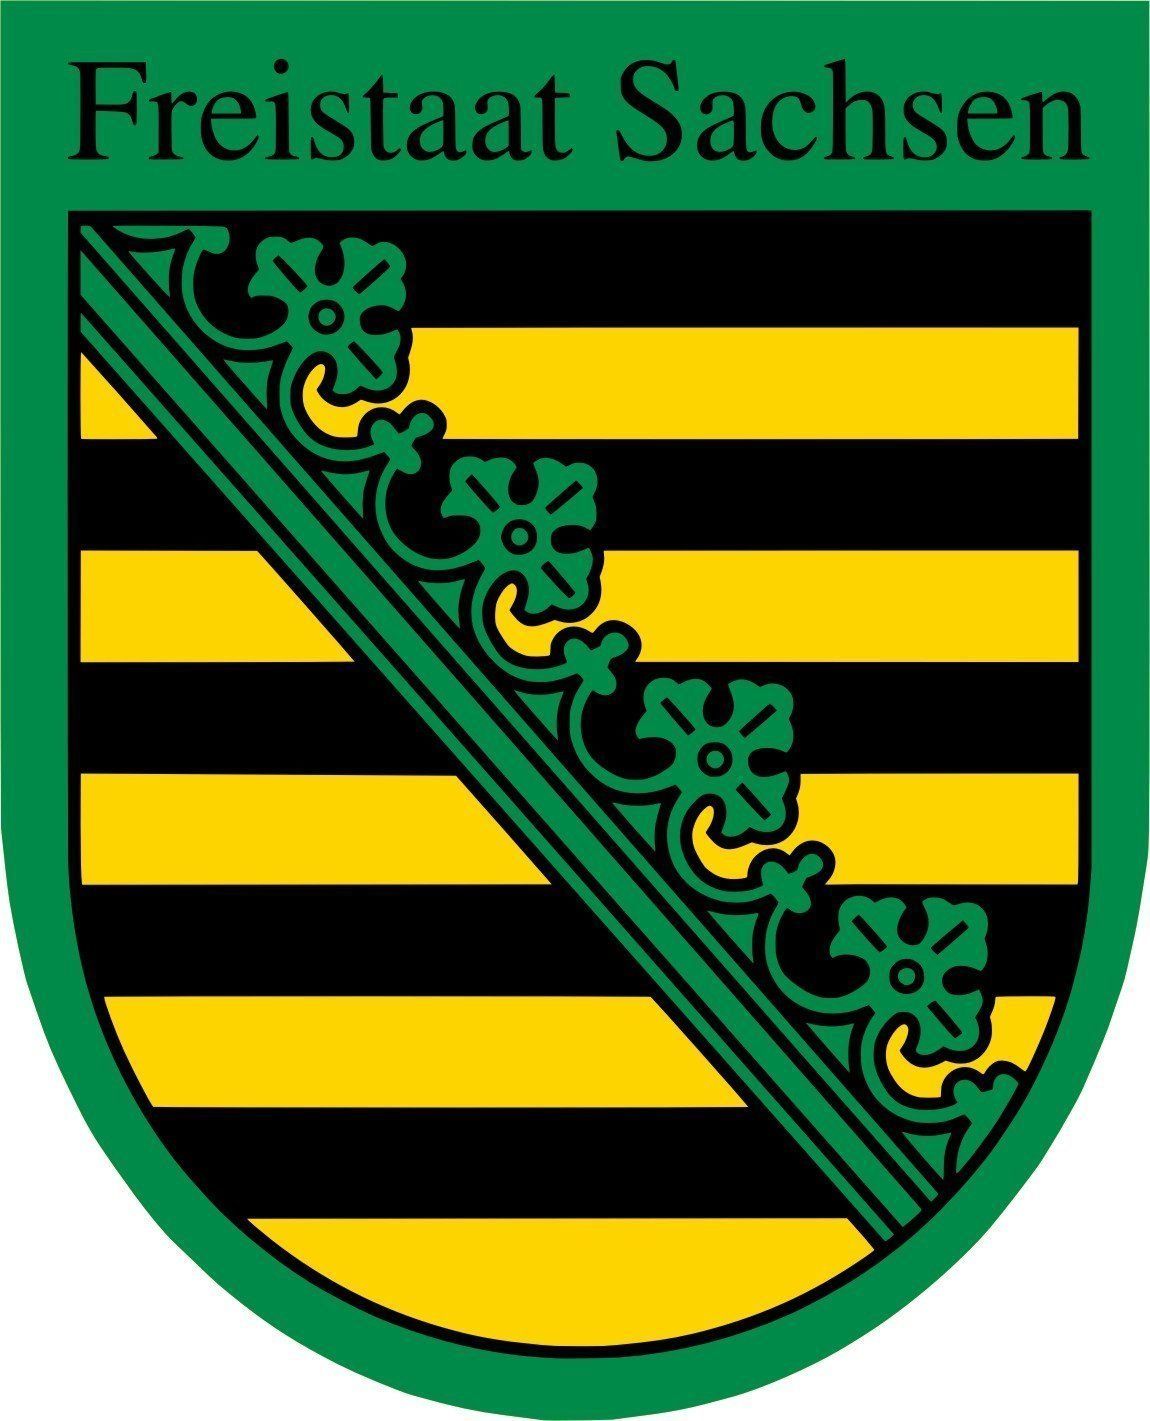 Freistaat Sachsen Logo